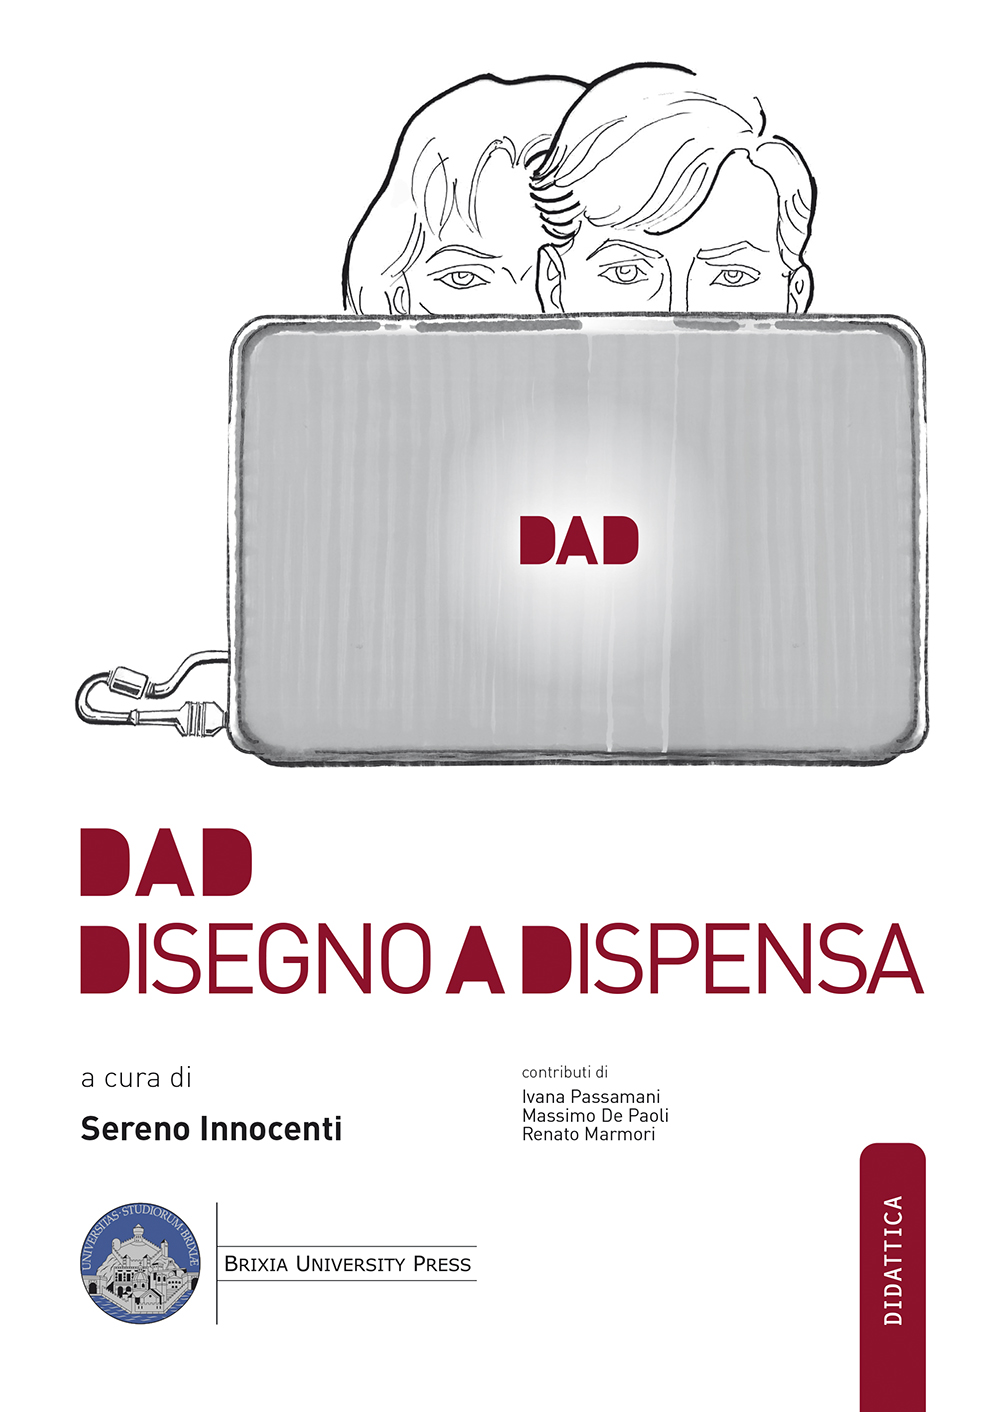 DAD - Bologna University Press